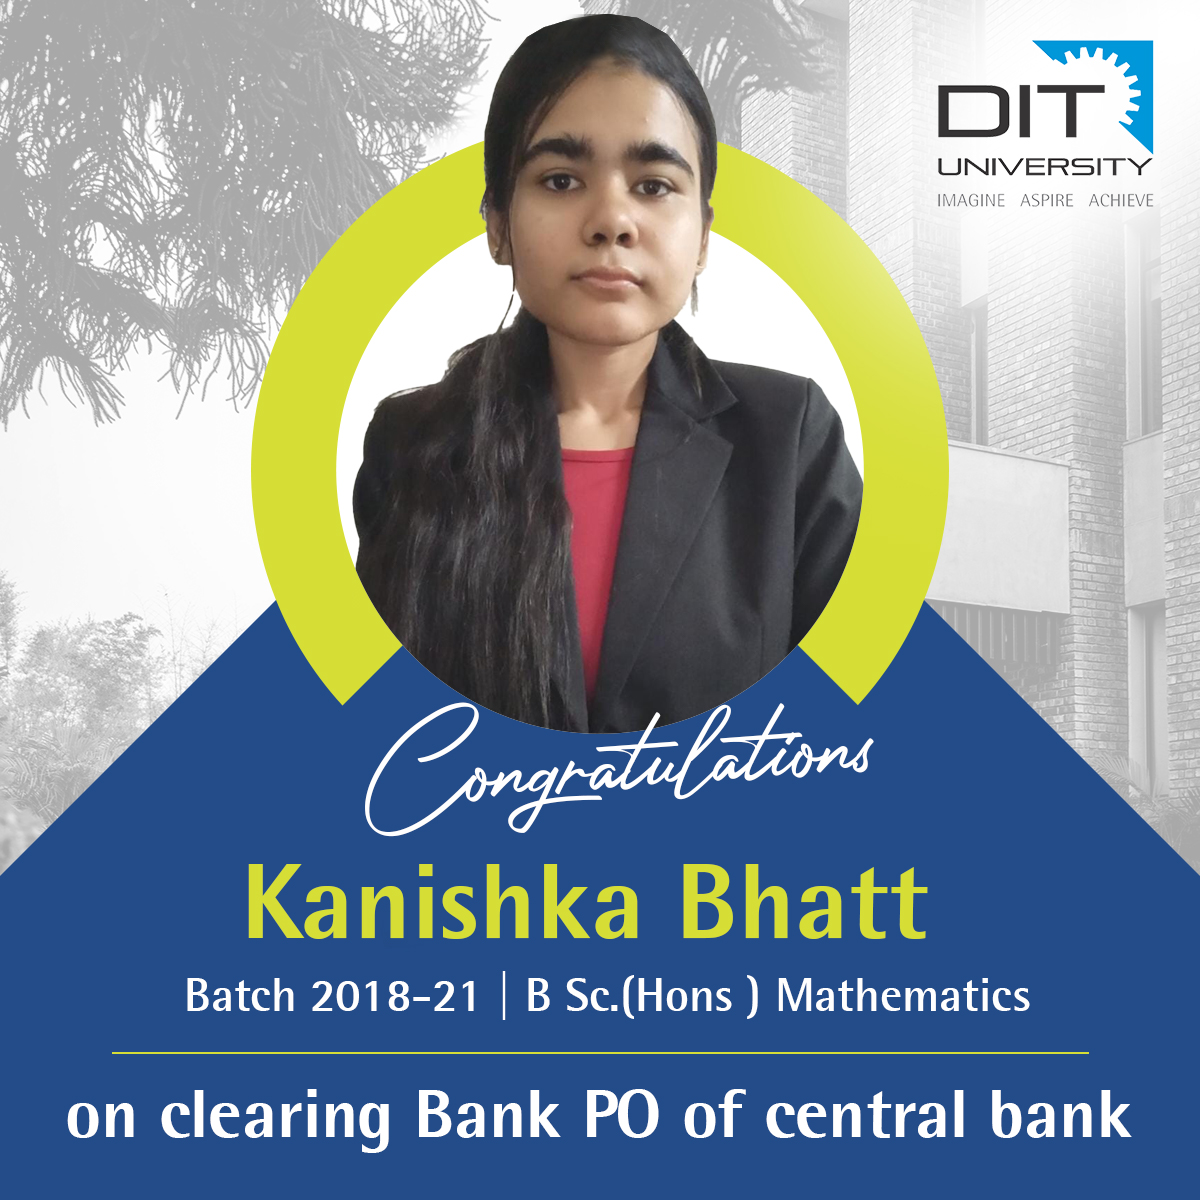 Kanishka Bhatt on clearing Bank PO of central bank